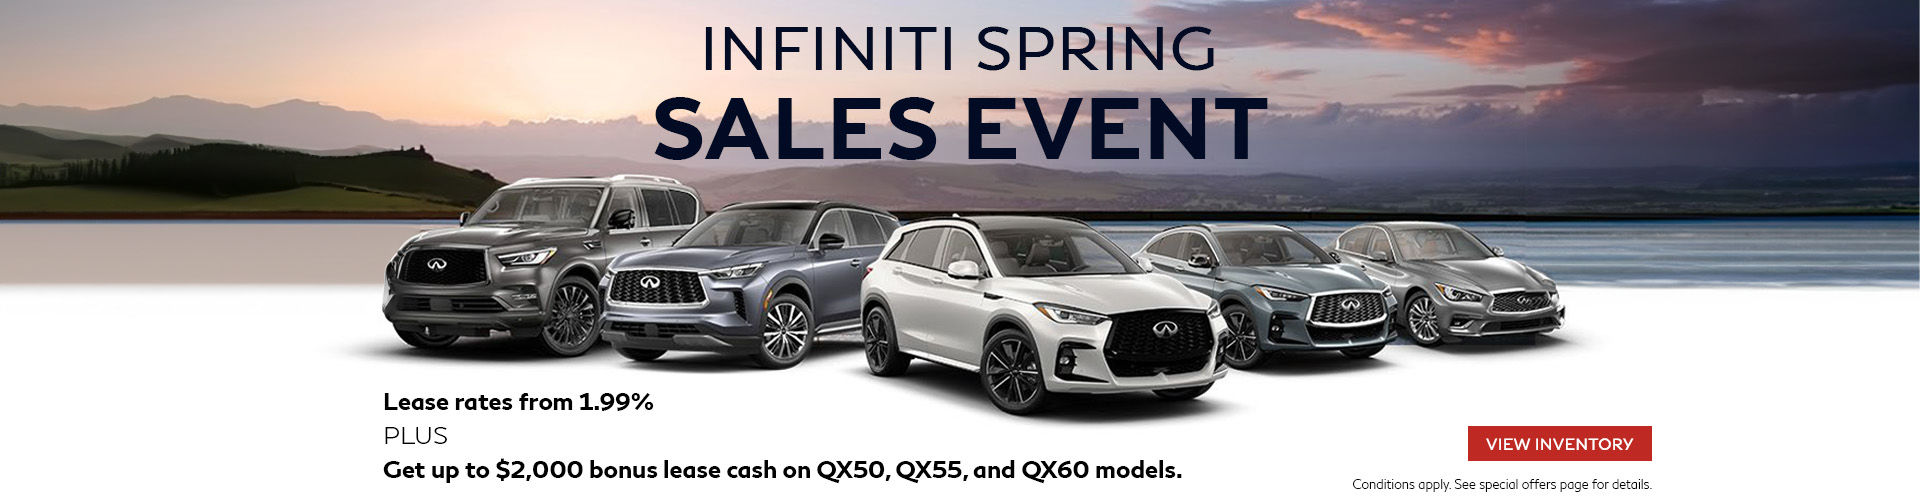 Infiniti Canada Spring Sales Event